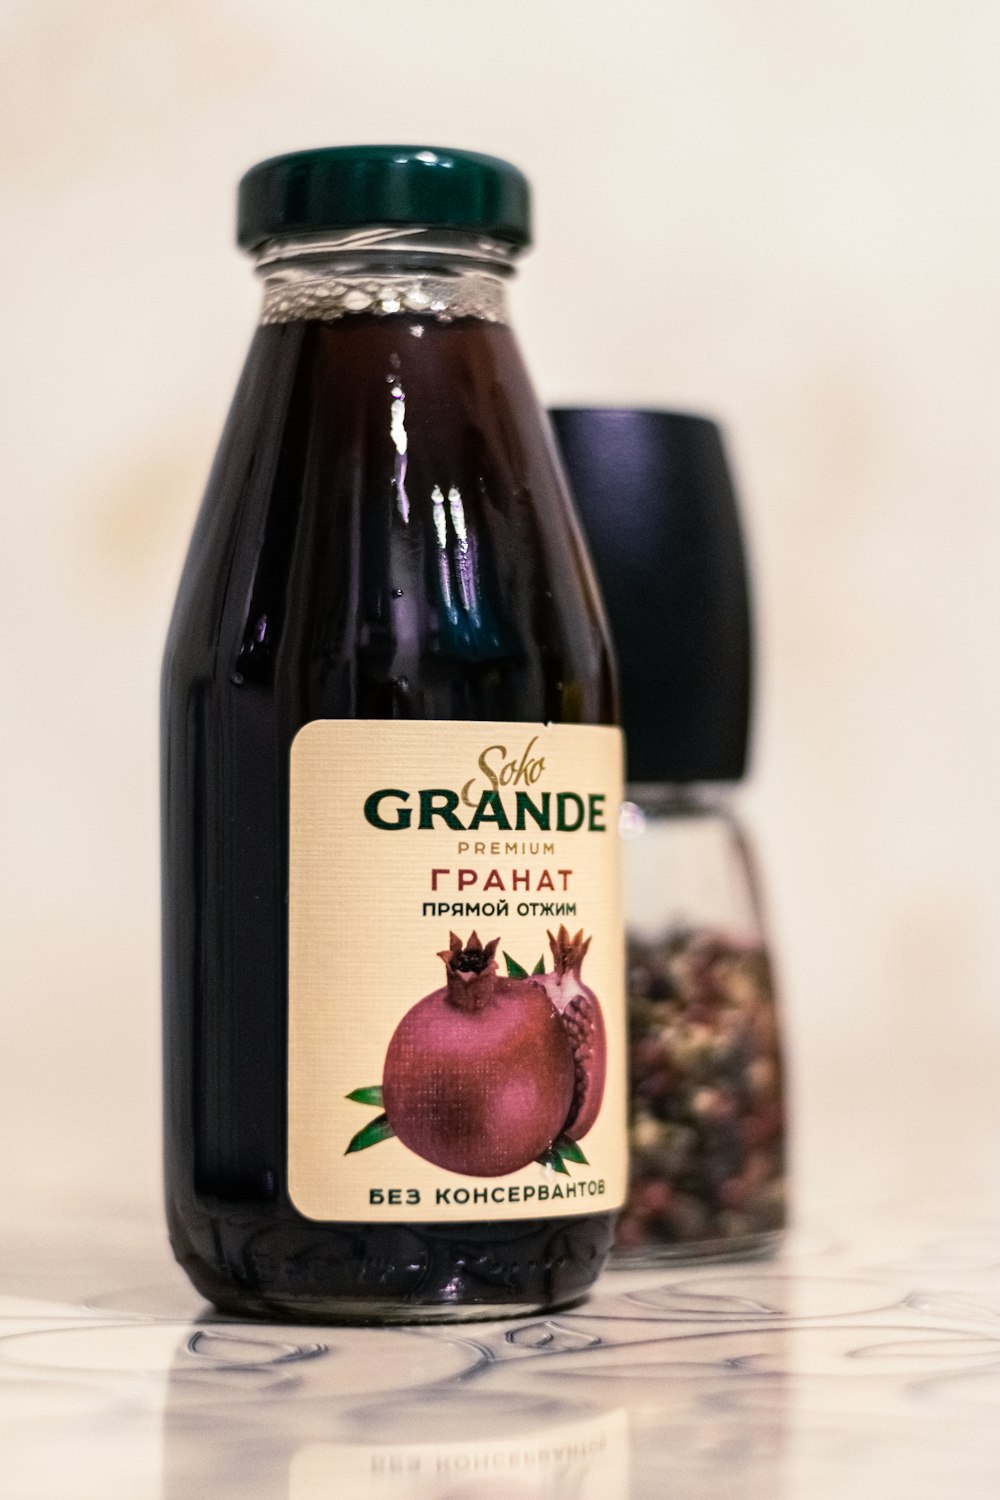 a bottle of grande pomegranate next to a jar of granola